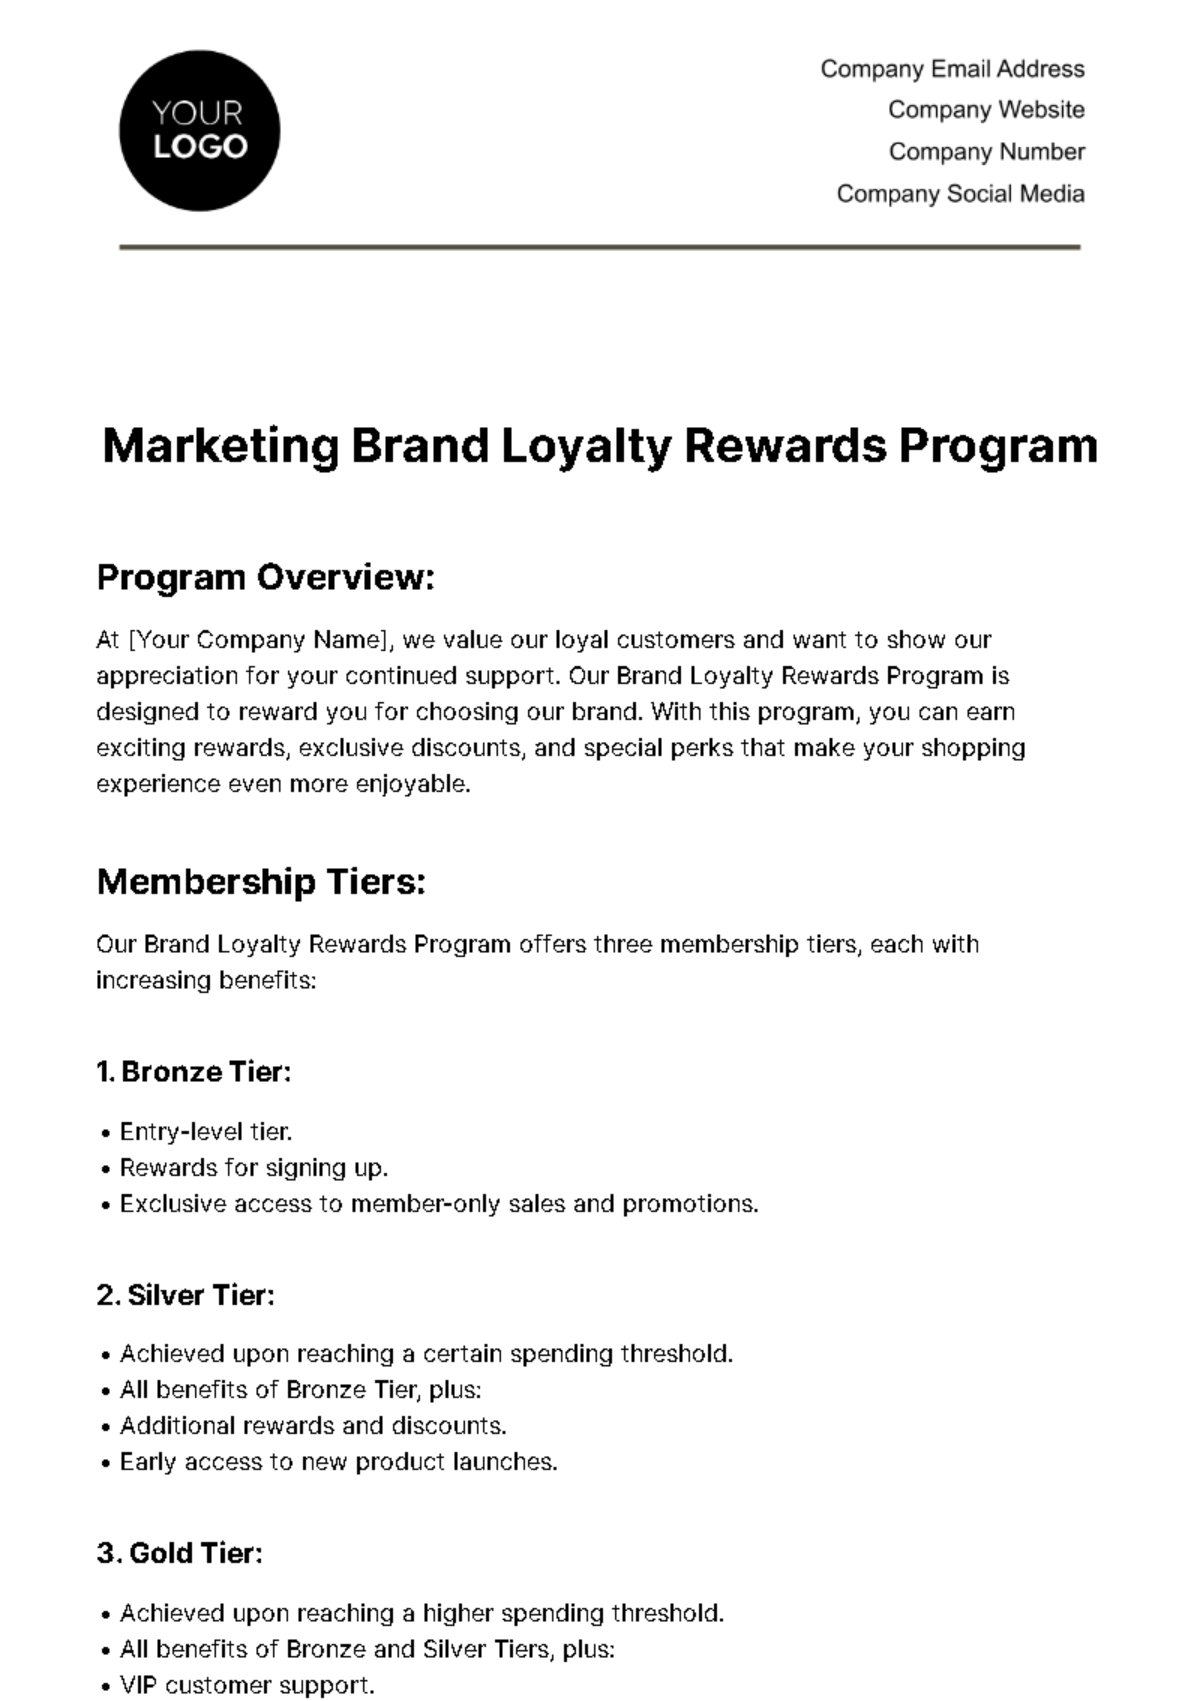 Marketing Brand Loyalty Rewards Program Template